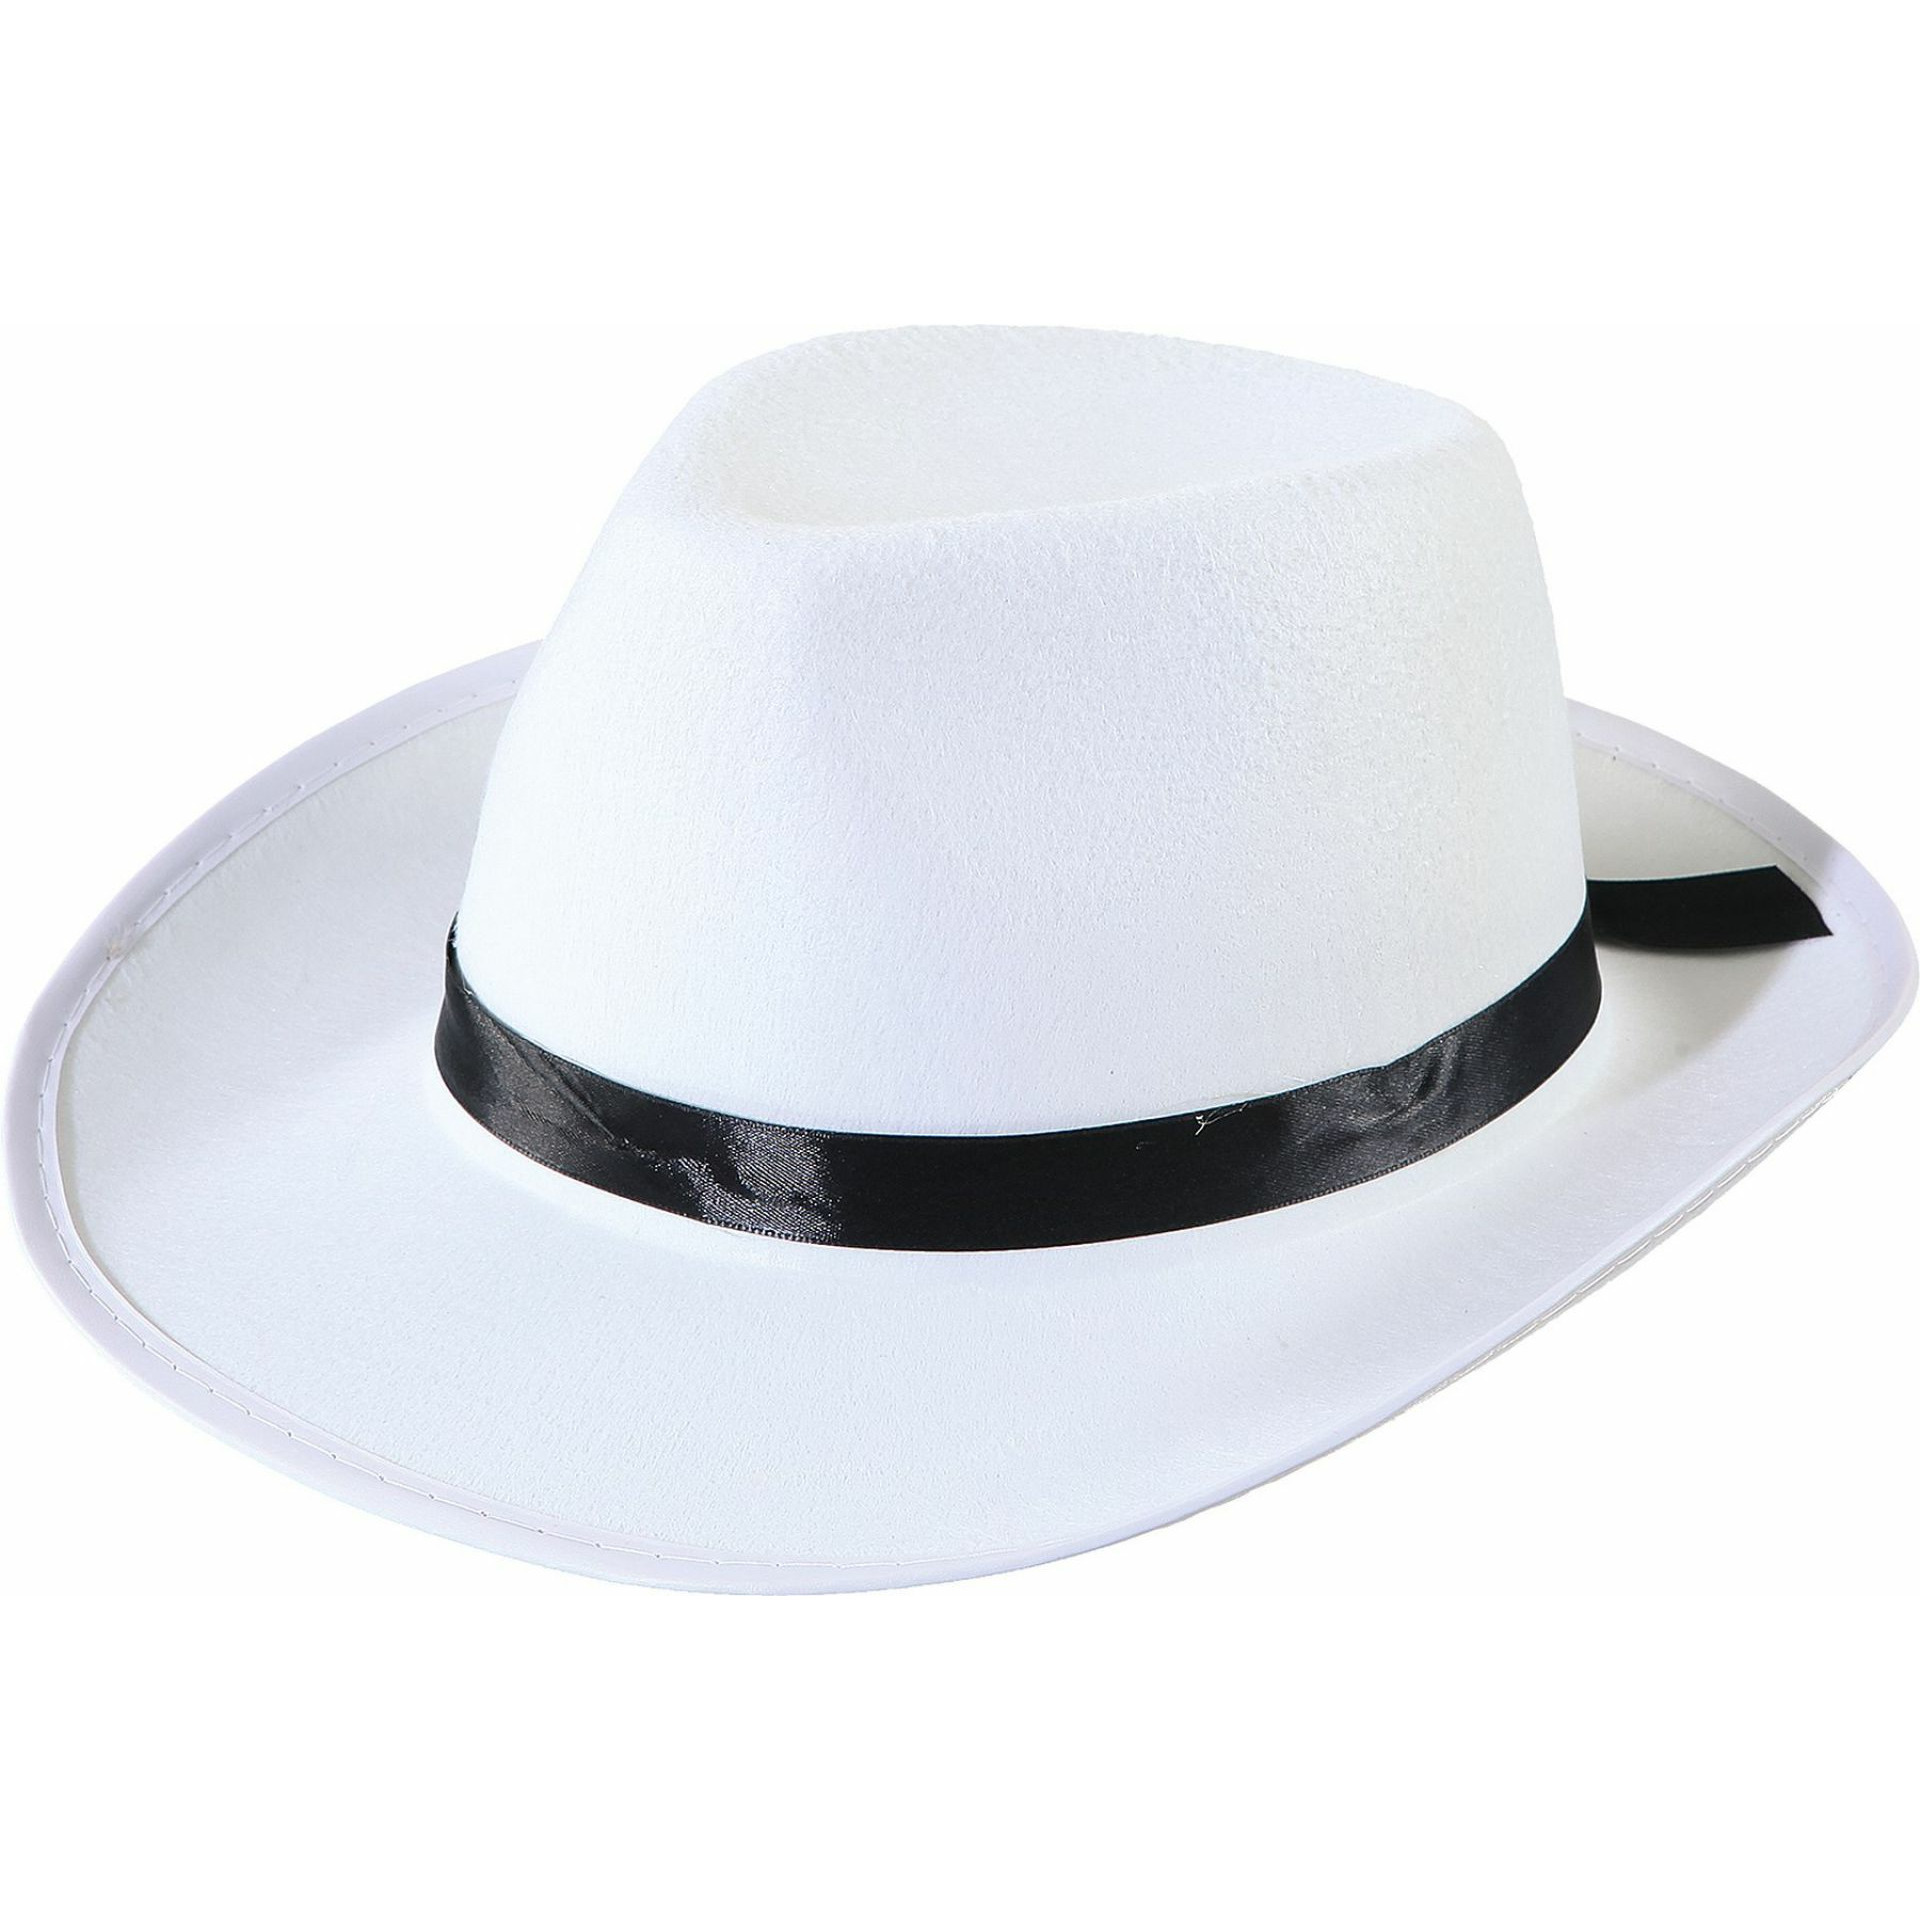 Al Capone gangster verkleed hoed wit met zwart -